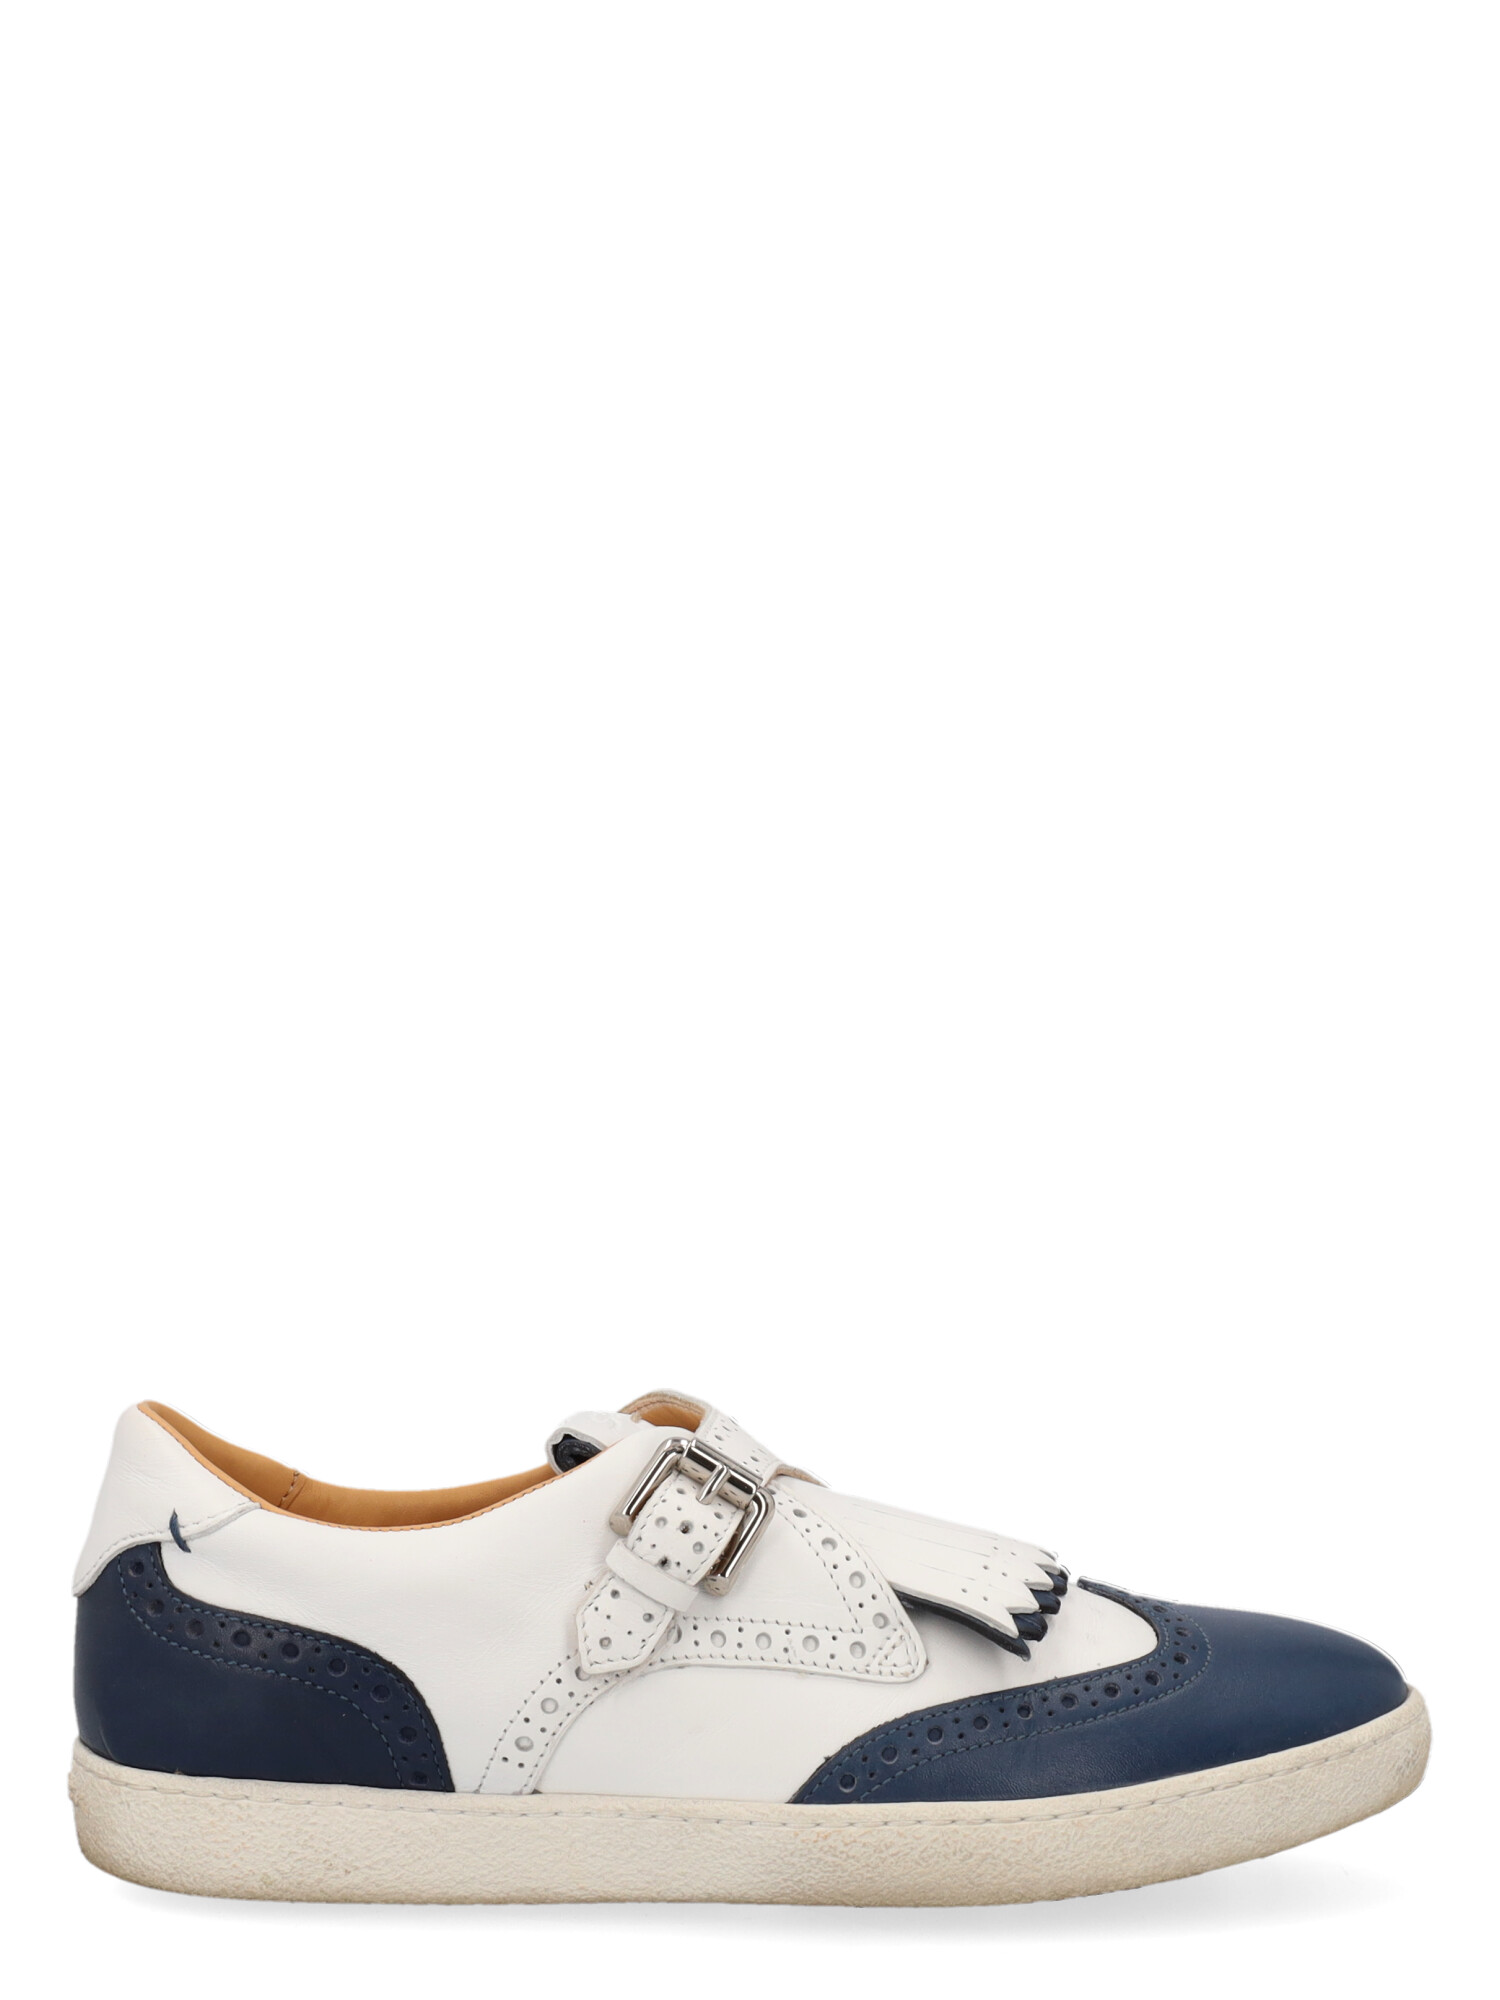 Santoni Femme Sneakers Navy, White Leather